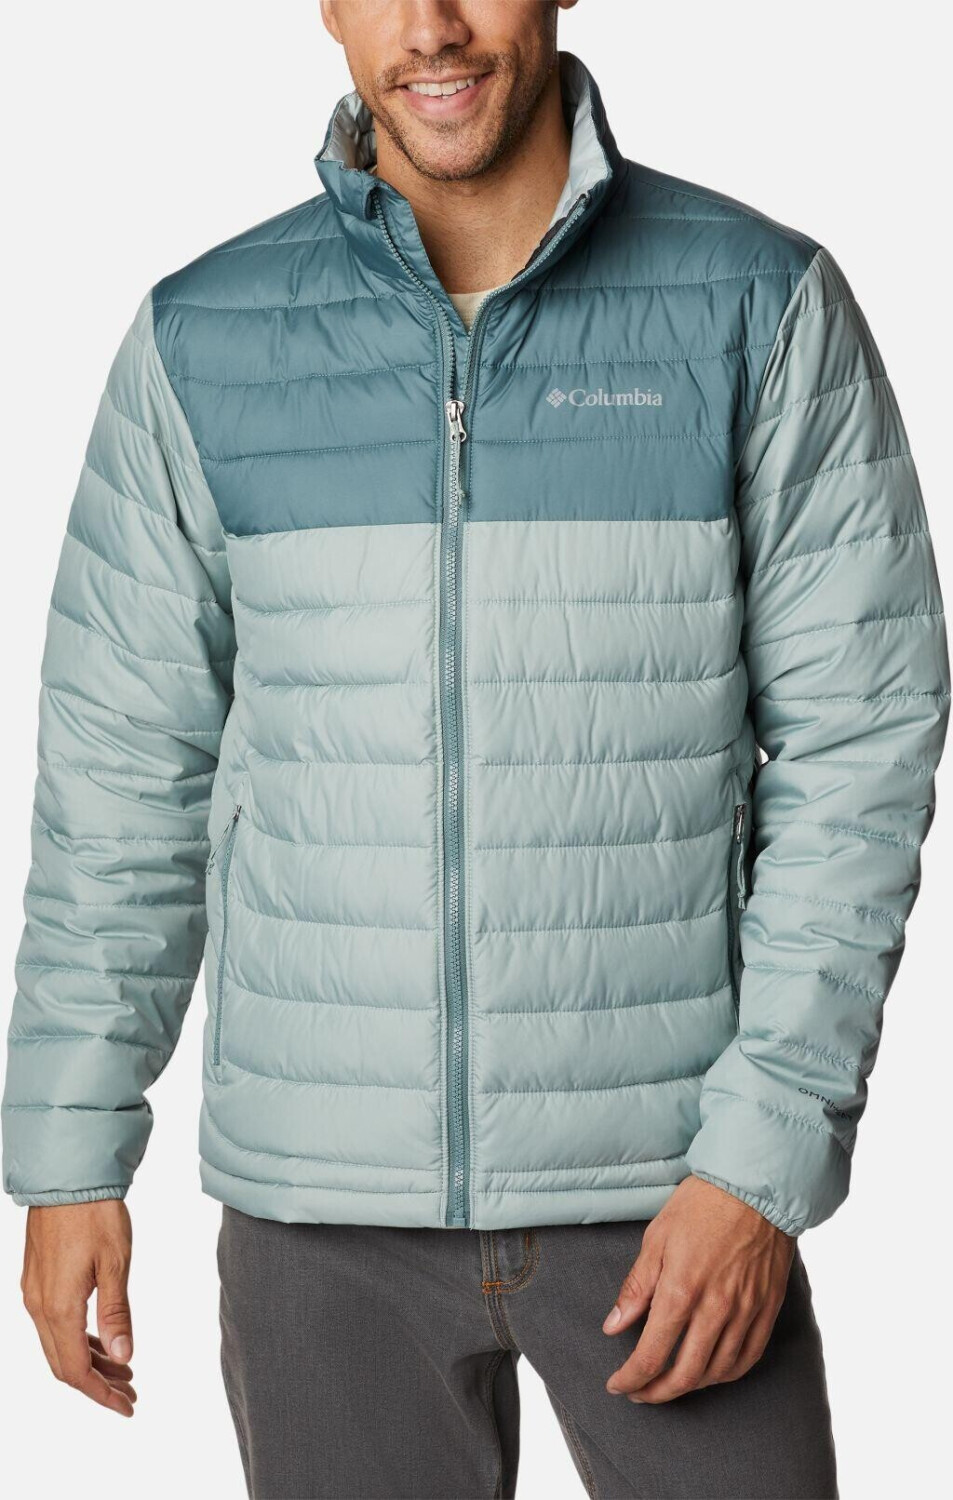 Columbia Powder Lite Hybrid gris chaqueta outdoor hombre